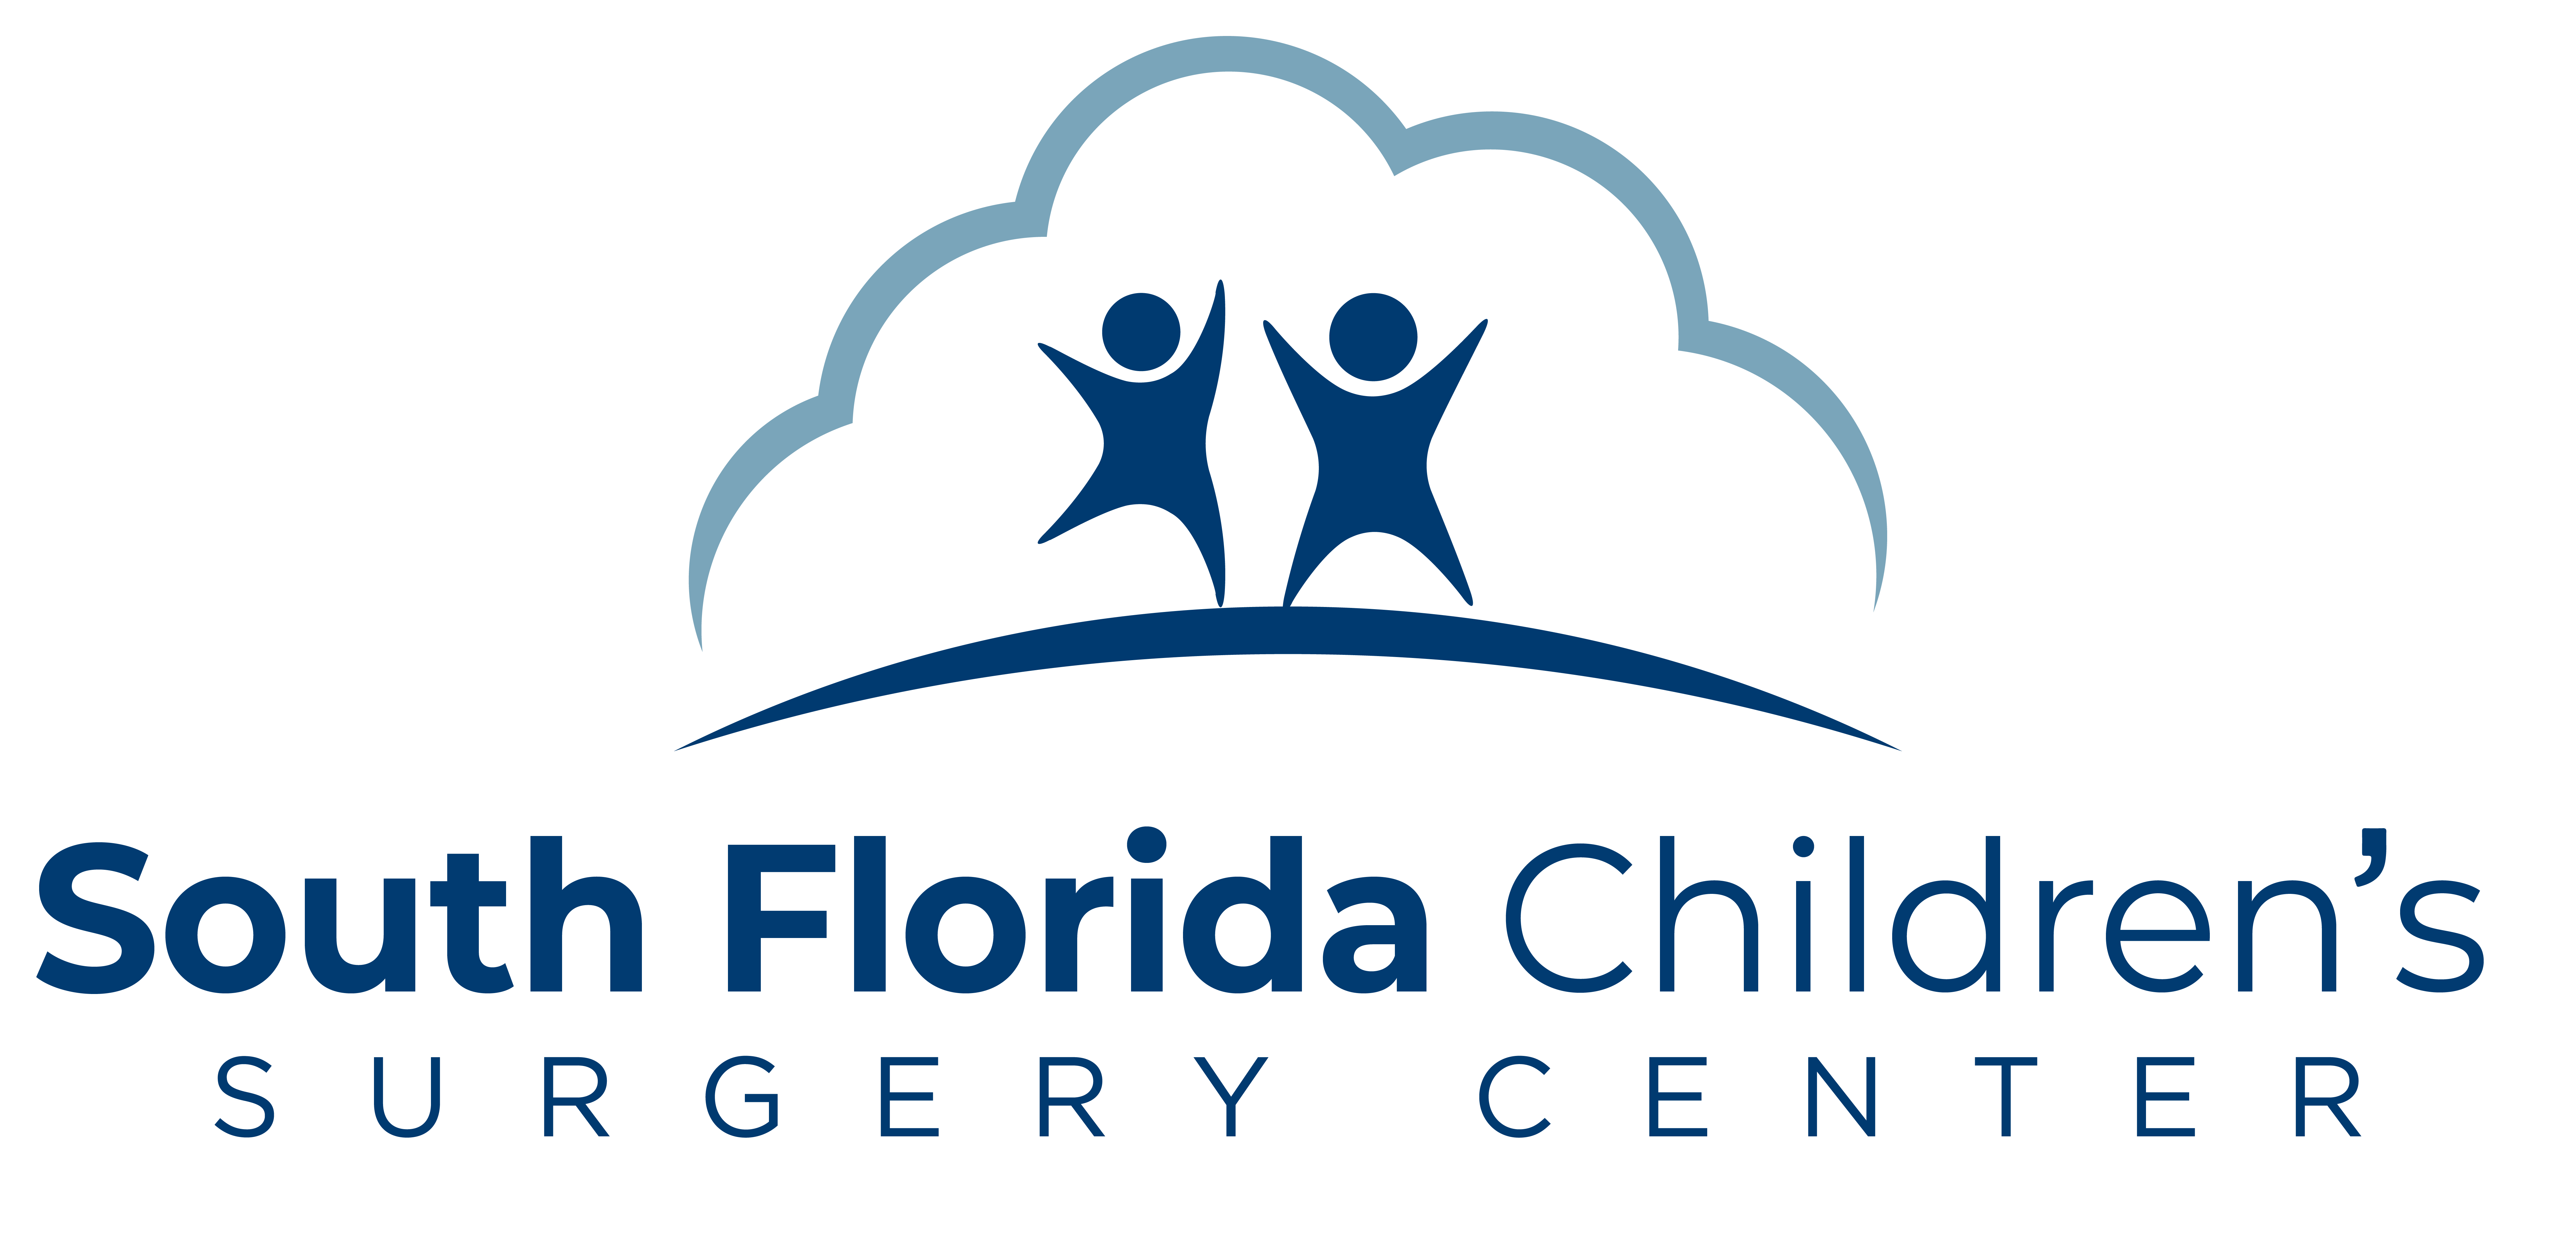 South Florida Children's Surgery Center